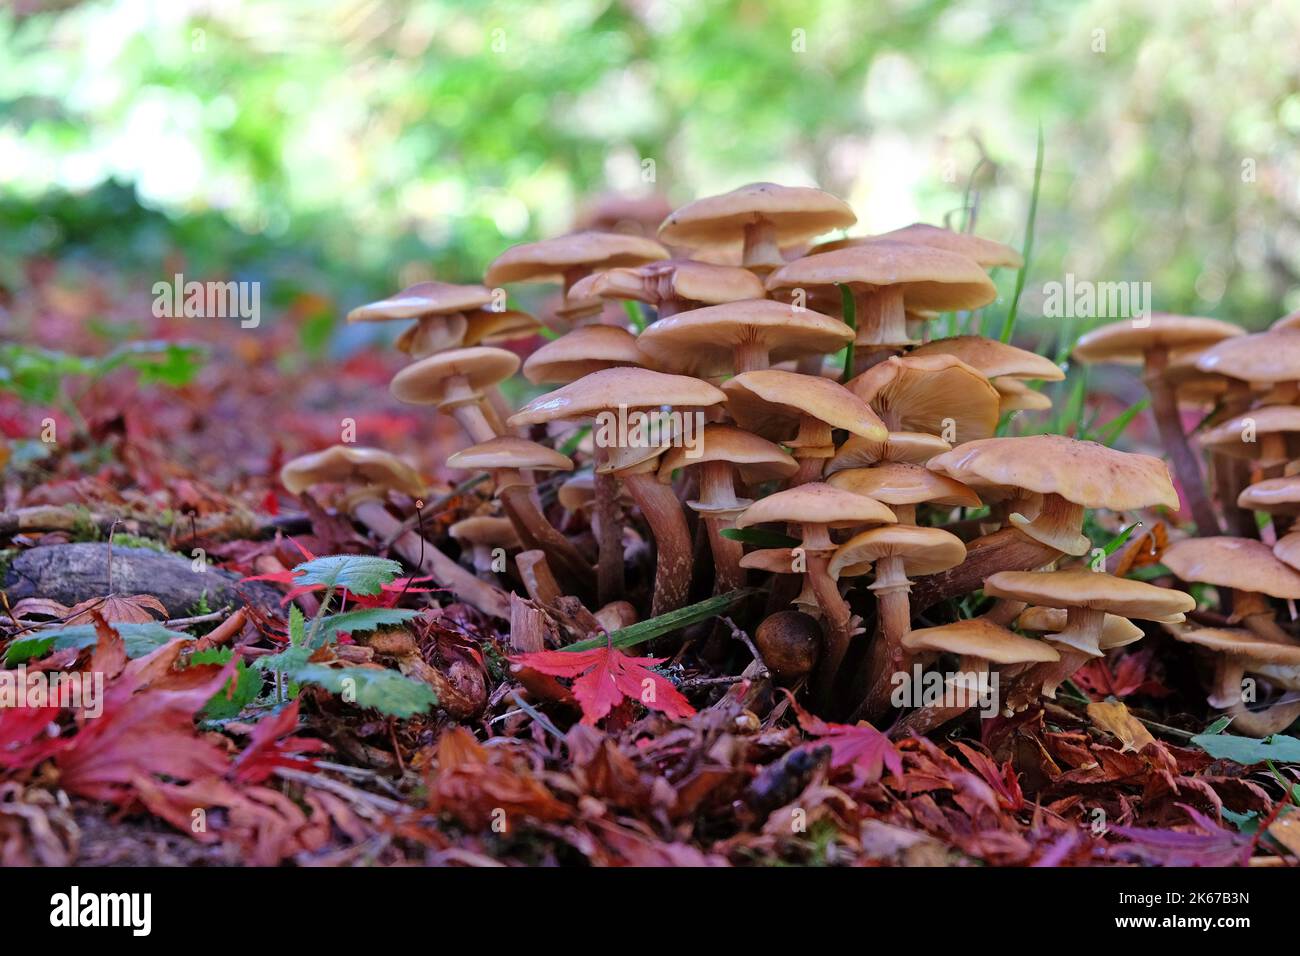 Honey Fungus growing among the leaf litter of the Japanese acres, Surrey, UK. Stock Photo